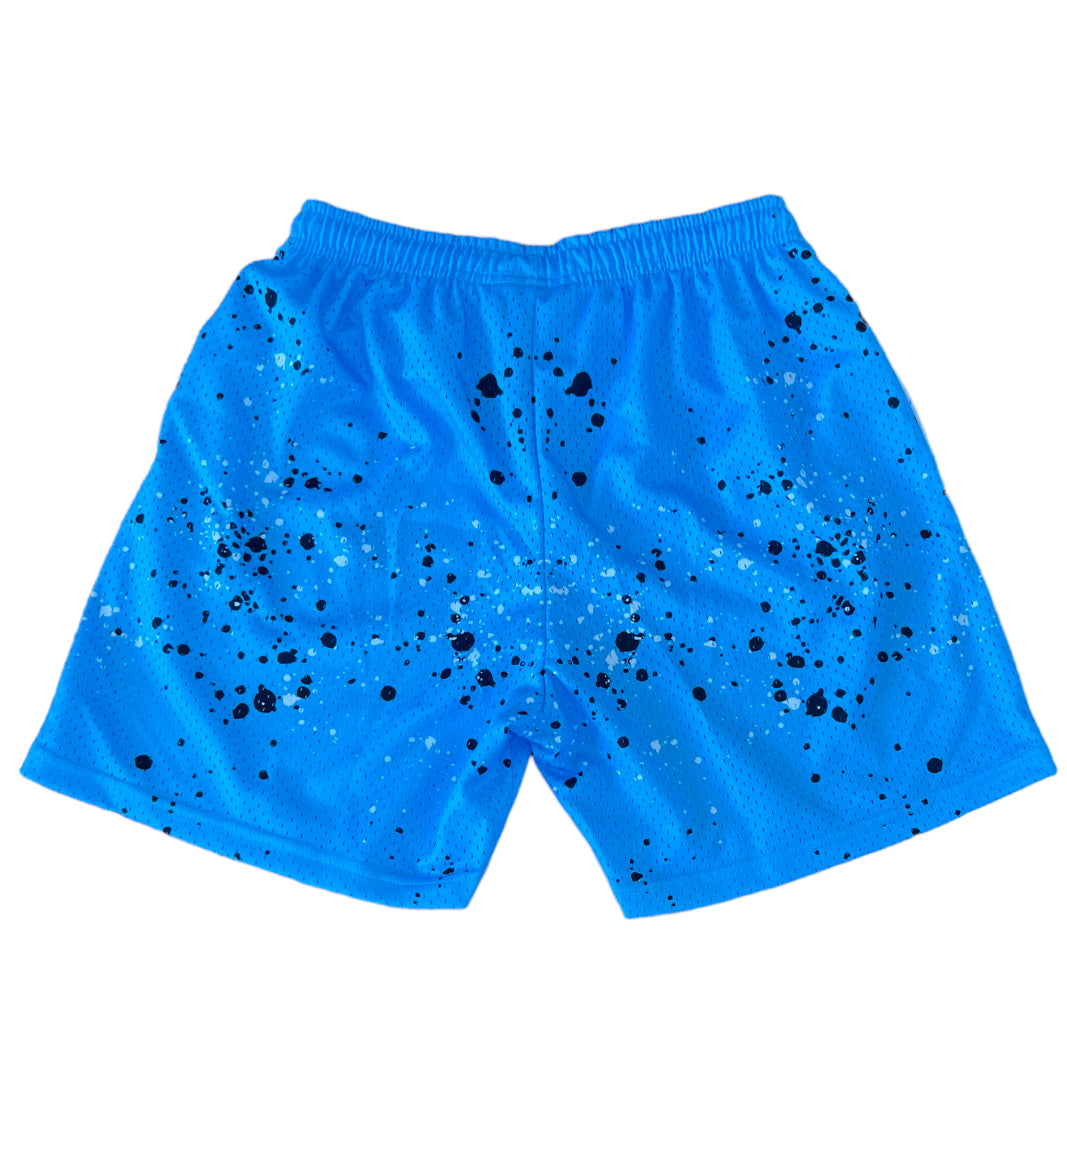 Blue Splatter Paint Mesh Shorts